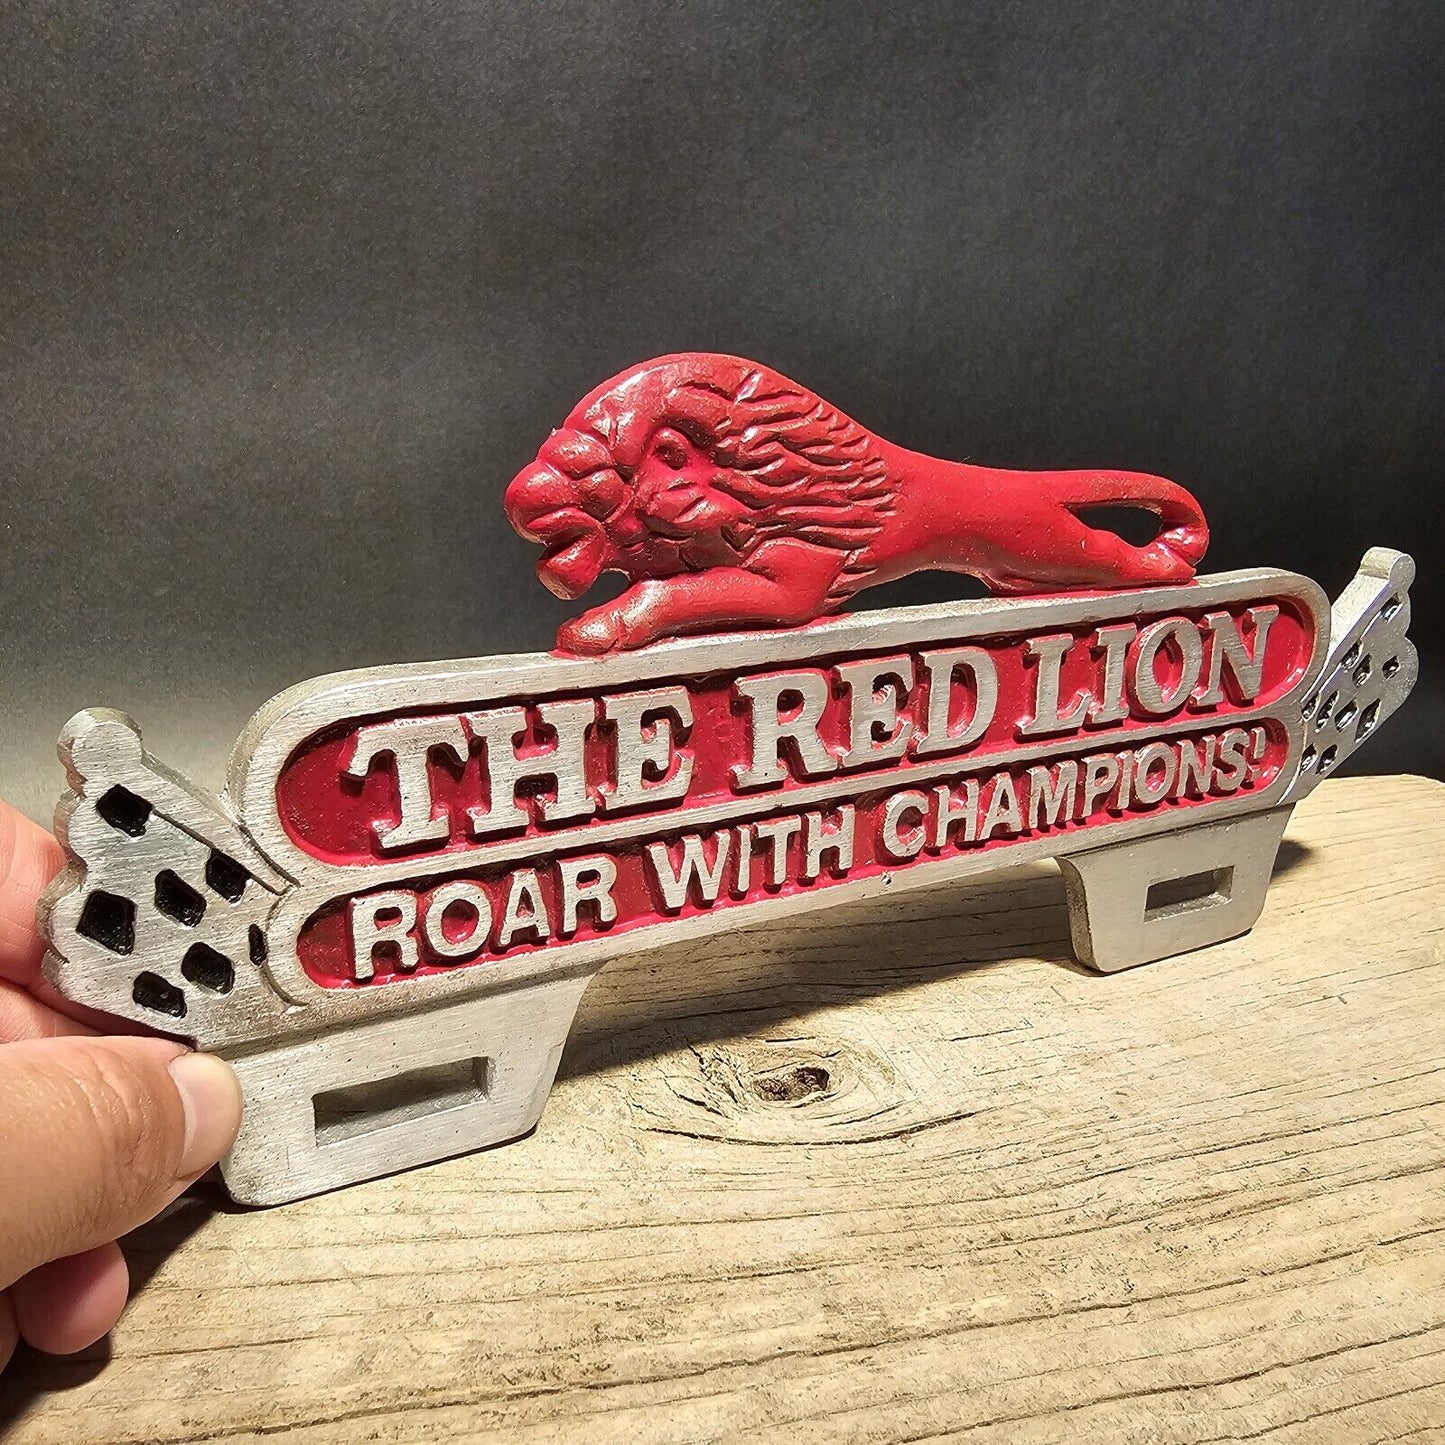 Antique Vintage Style Aluminum Red Lion License Plate Fob Topper